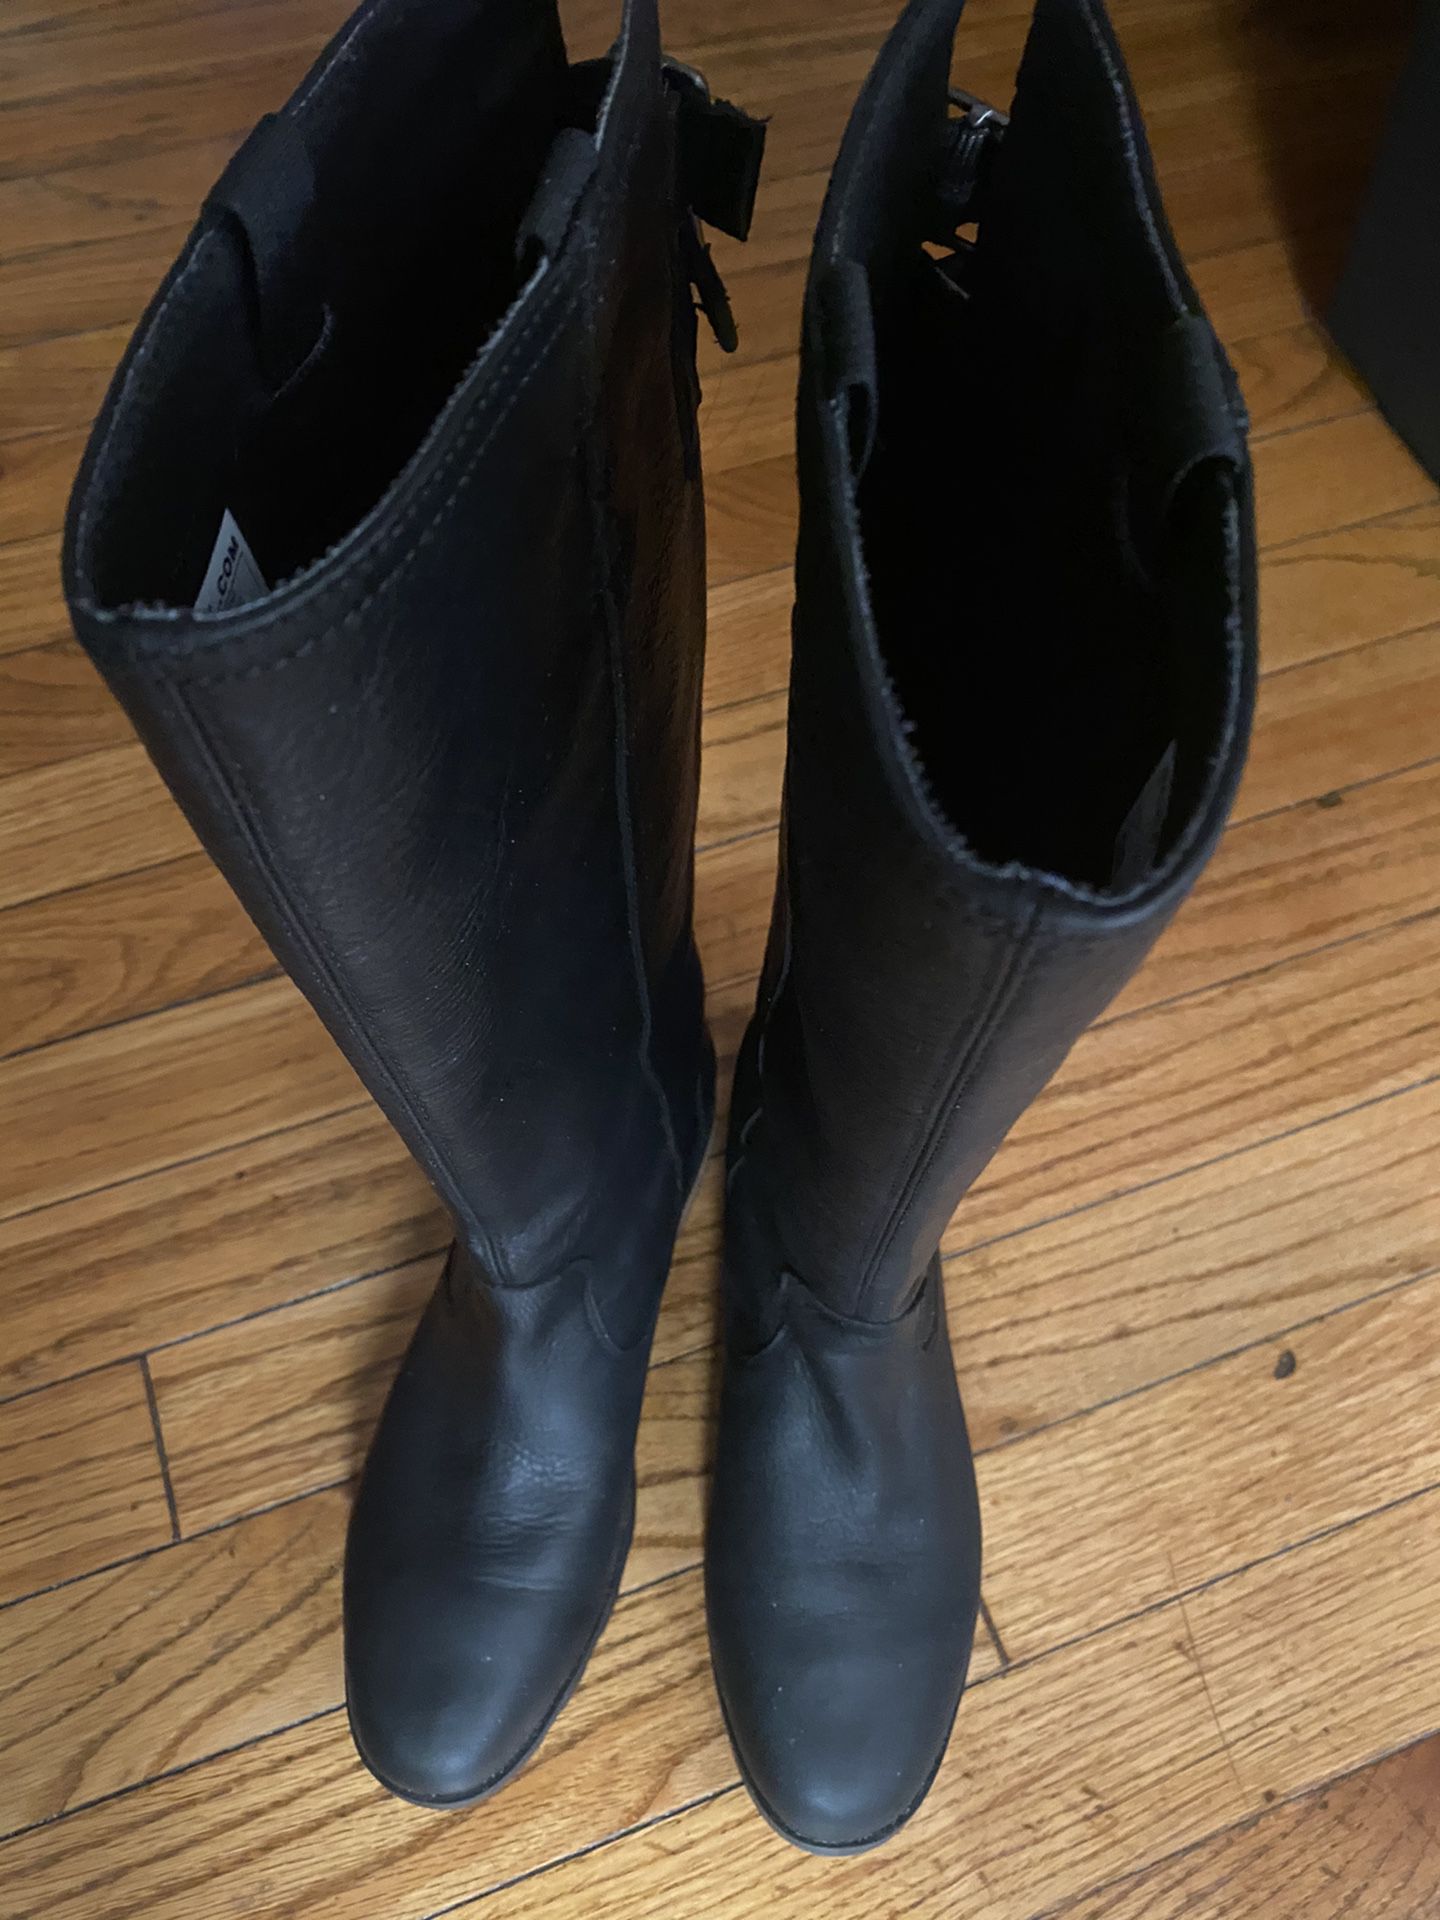 Sorel women’s boots size 7